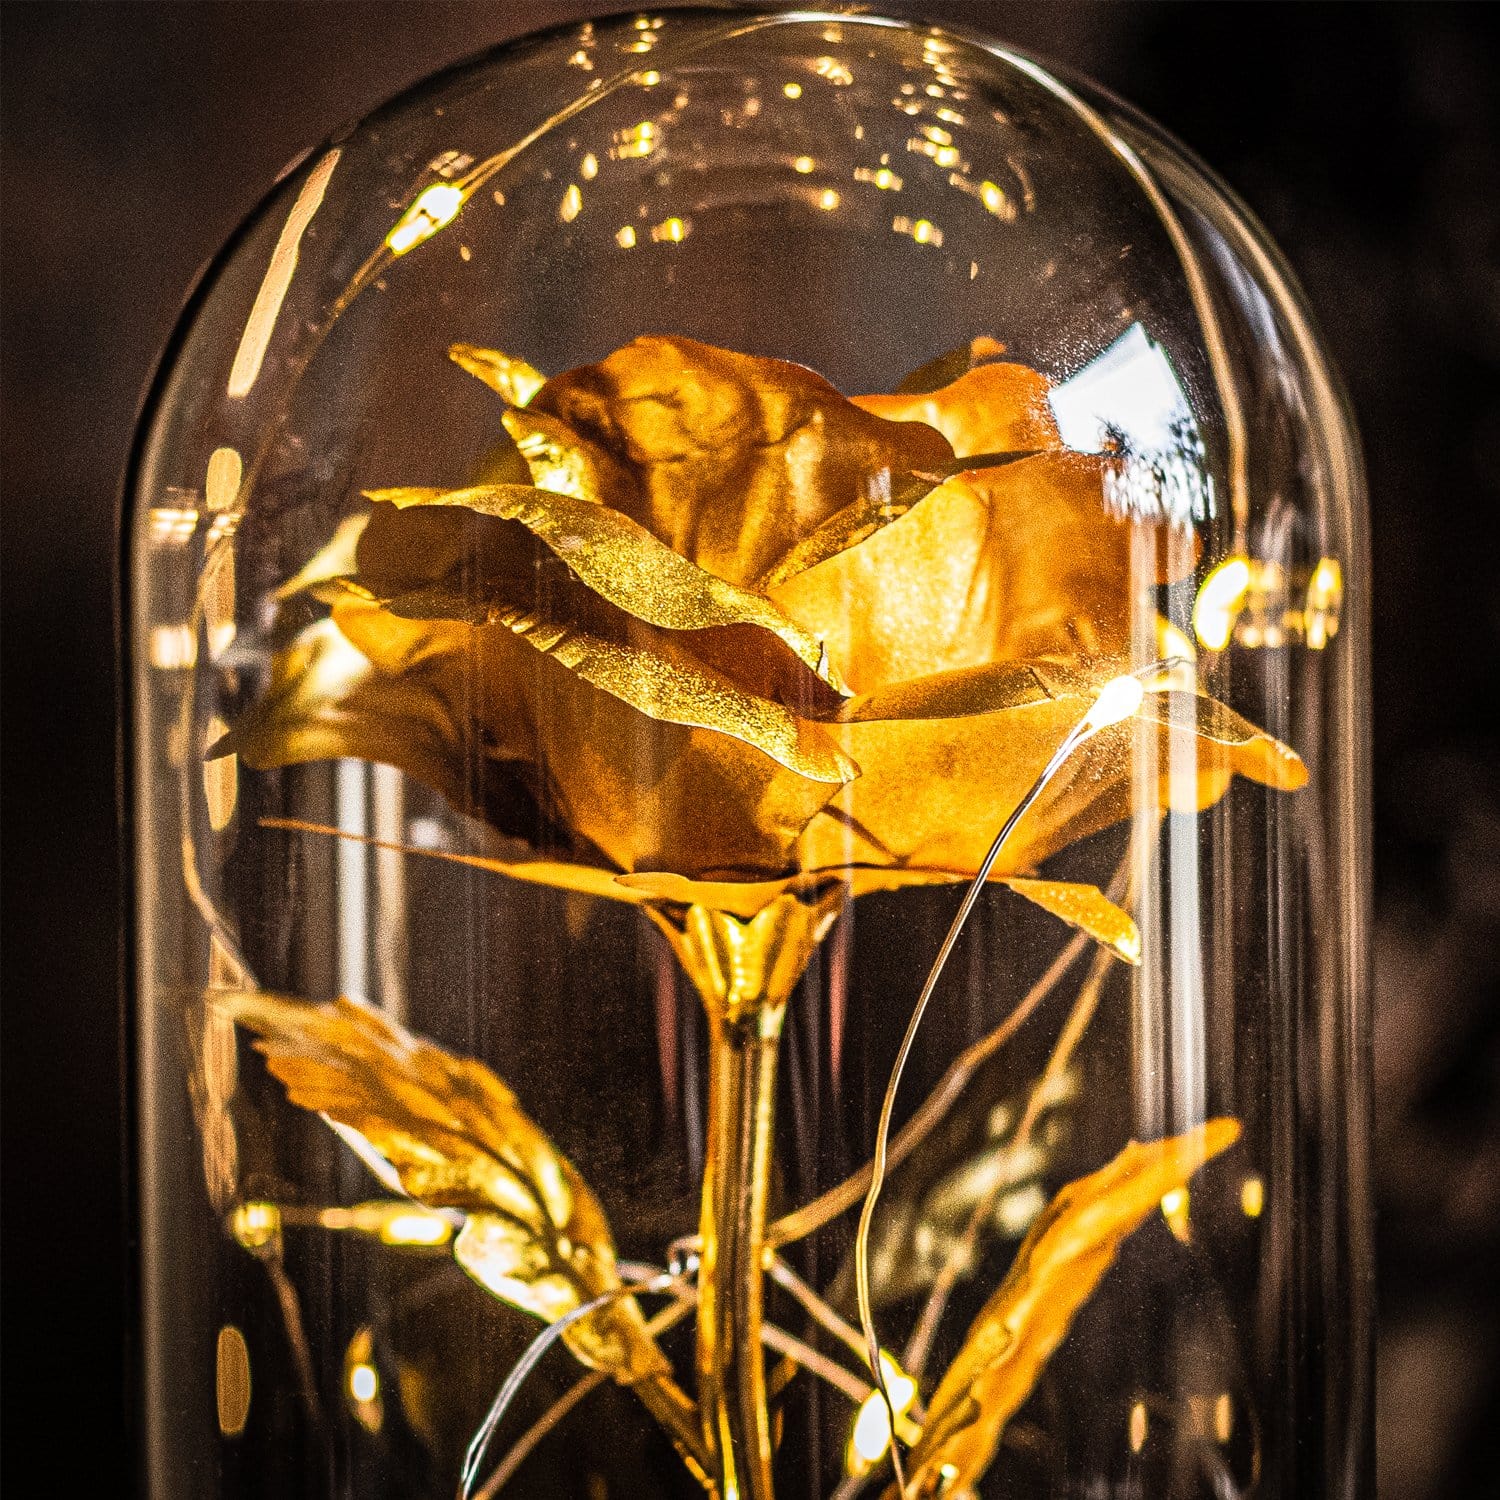 Ewige goldene Rose im Glas mit Gravur